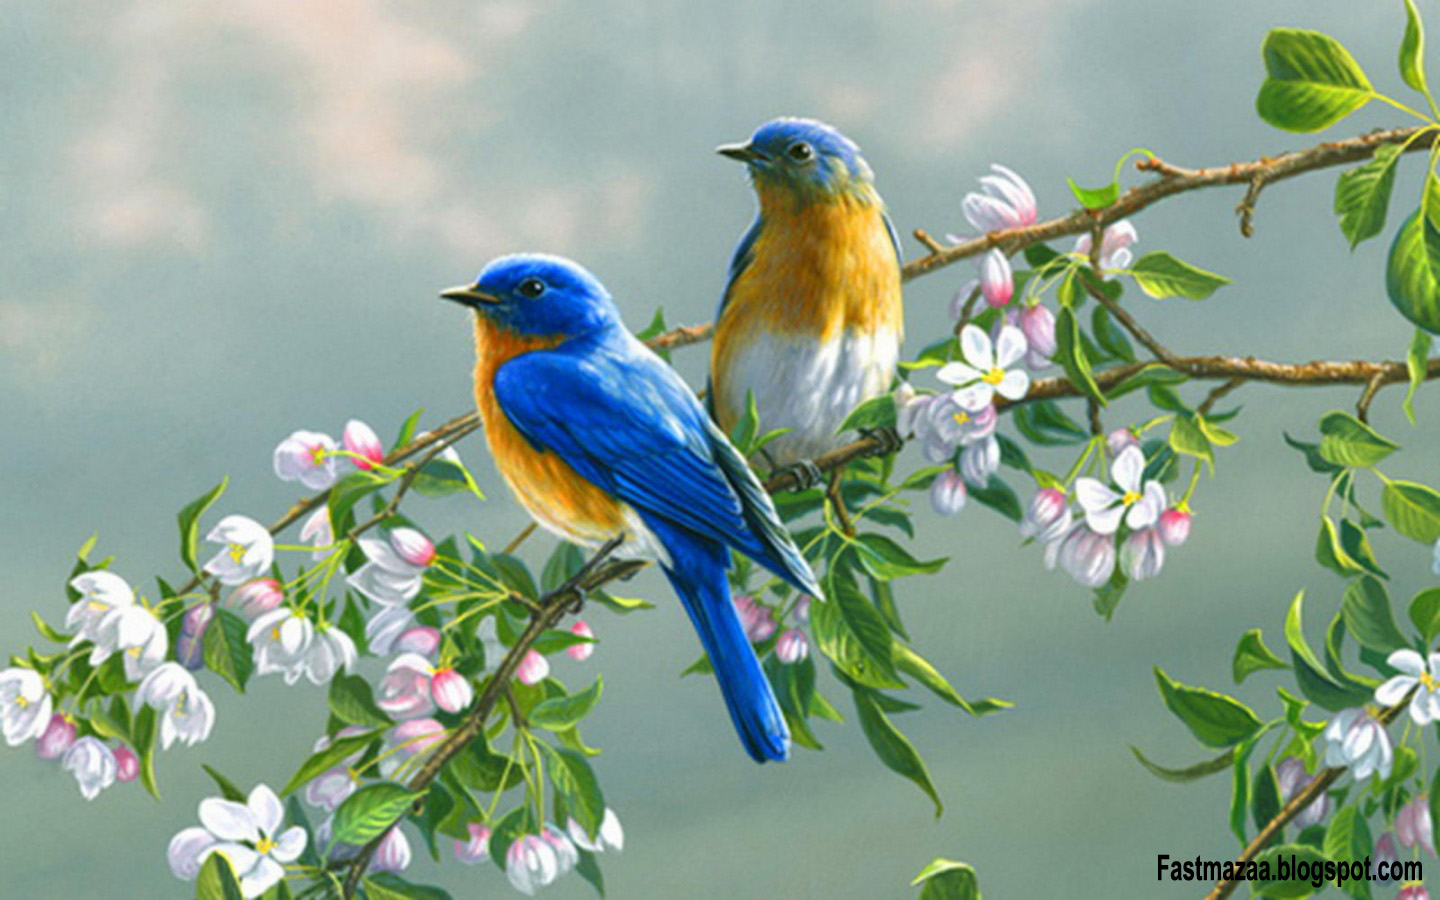 https://blogger.googleusercontent.com/img/b/R29vZ2xl/AVvXsEic1BF7dXLQzq8KJXe4ROH2IuIpLYpYwuC0z8MBgLELVVFLLLOtAaGAQqc2VfYn0717AiV6a0SR34WSnbAVHewMw11DGs7zI_G4UQ4gKqSM9sVNwgk7OpOWpaIwXM90t_WFKZhxYyNDWts/s1600/45523-beautiful-birds-birds-in-love.jpg